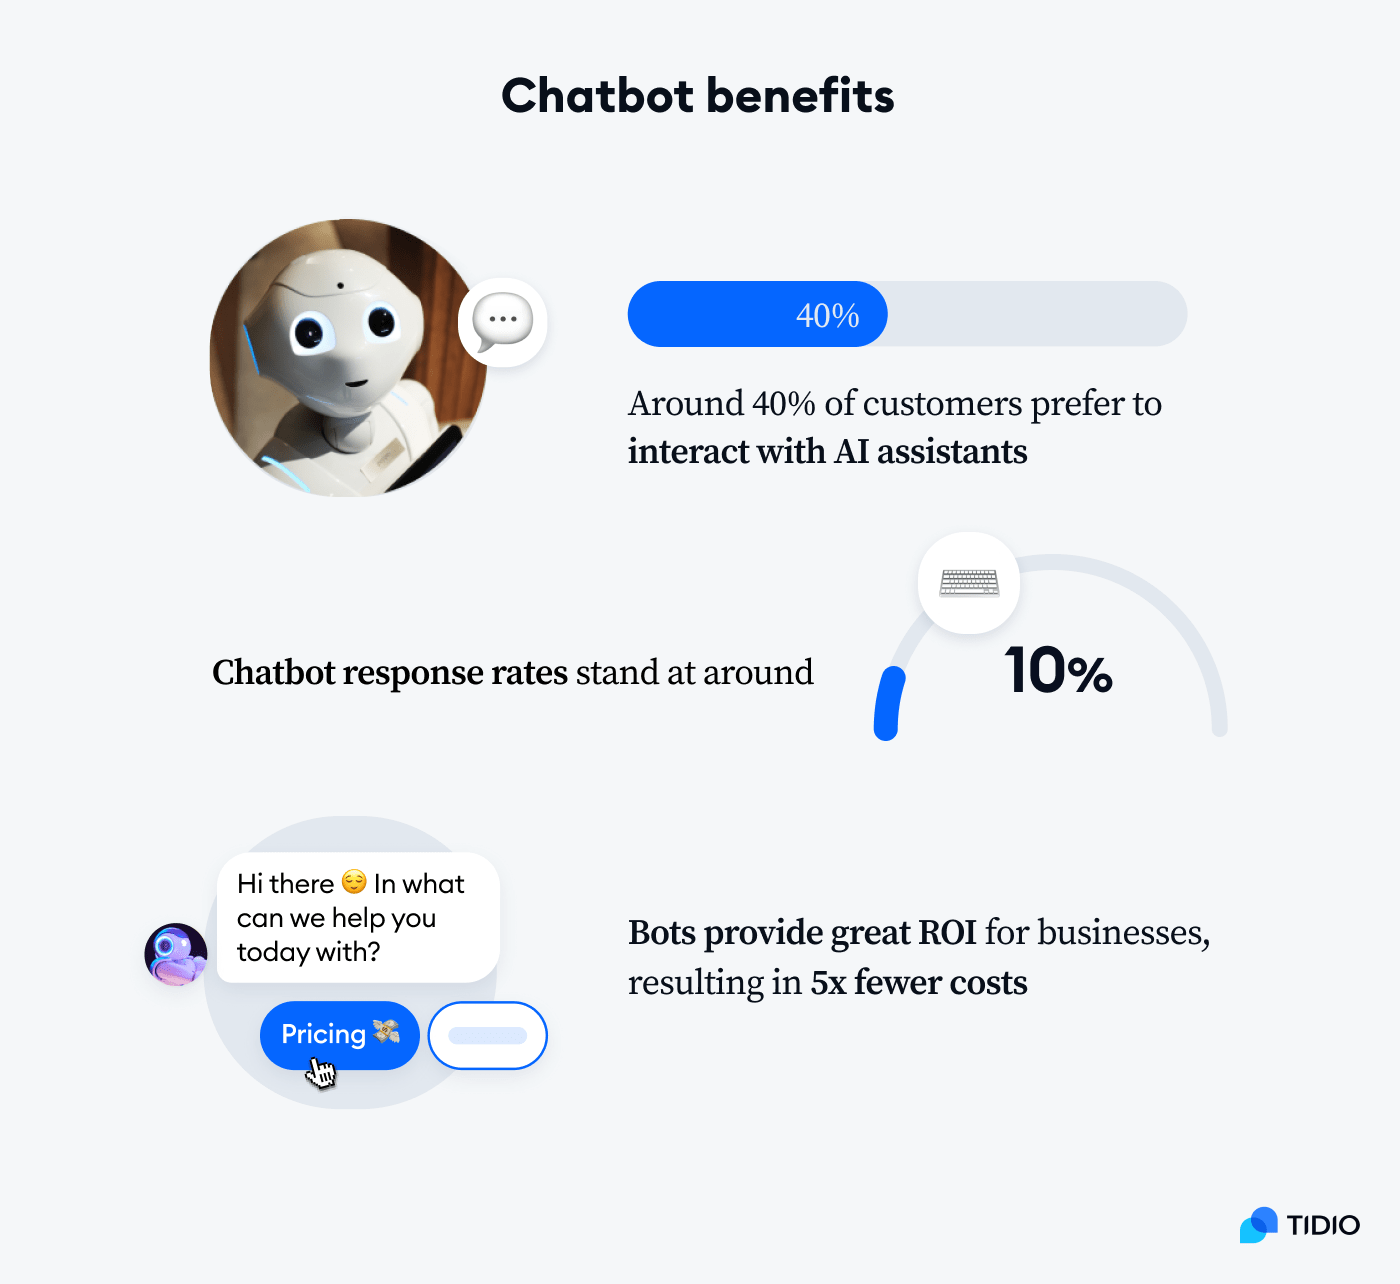 chatbot benefits on image